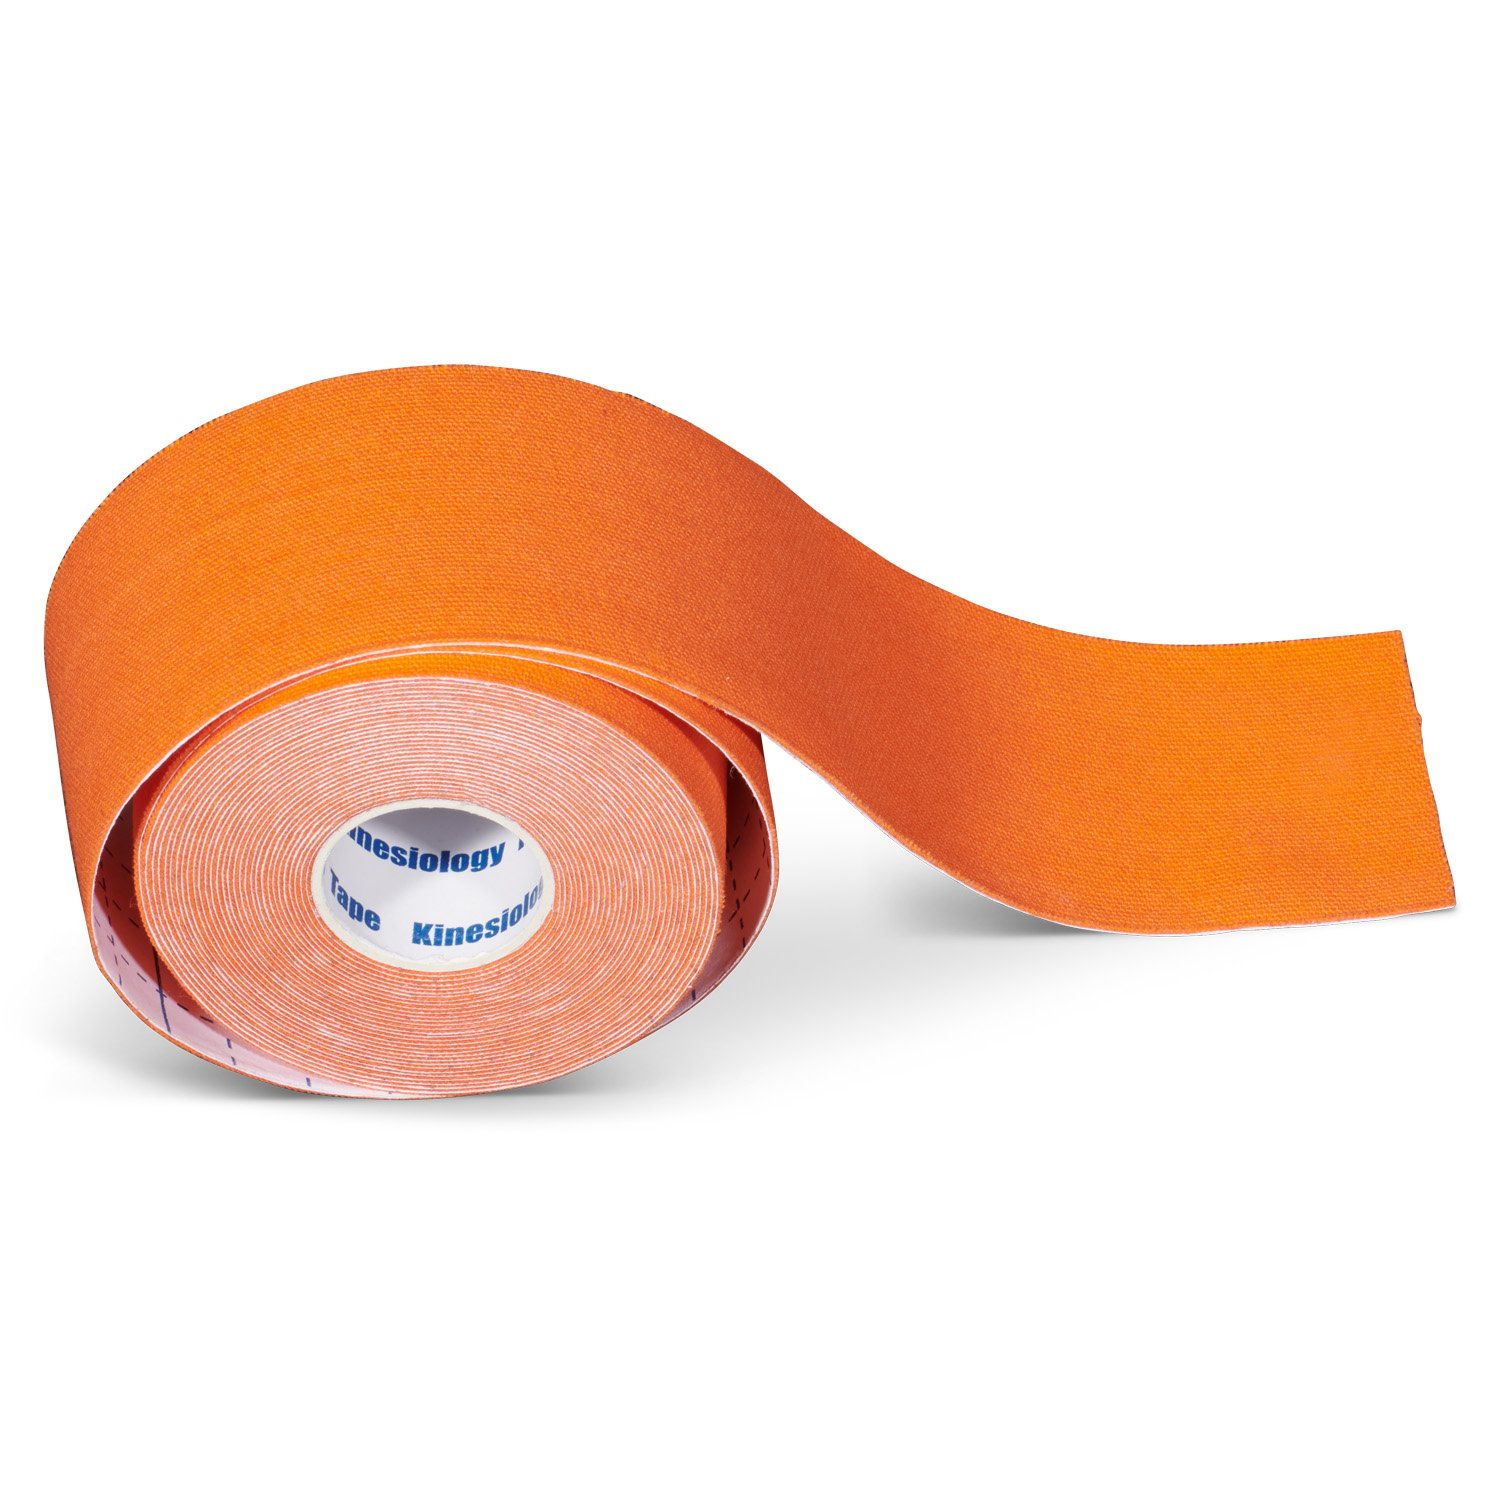 Kinesiology tape per roll orange